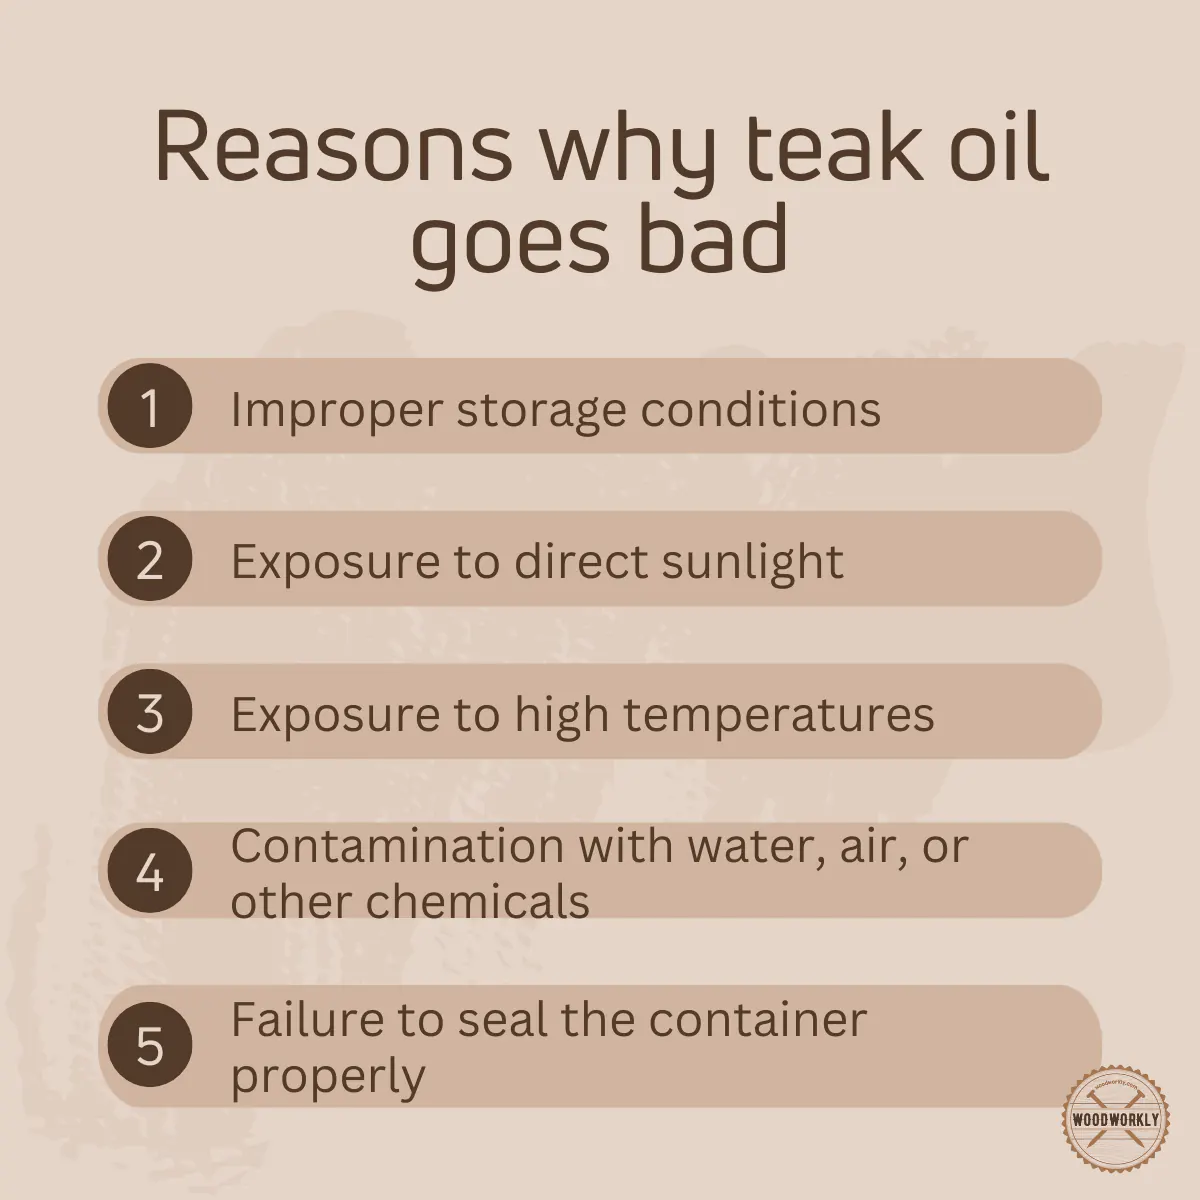 Reasons why teak oil goes bad